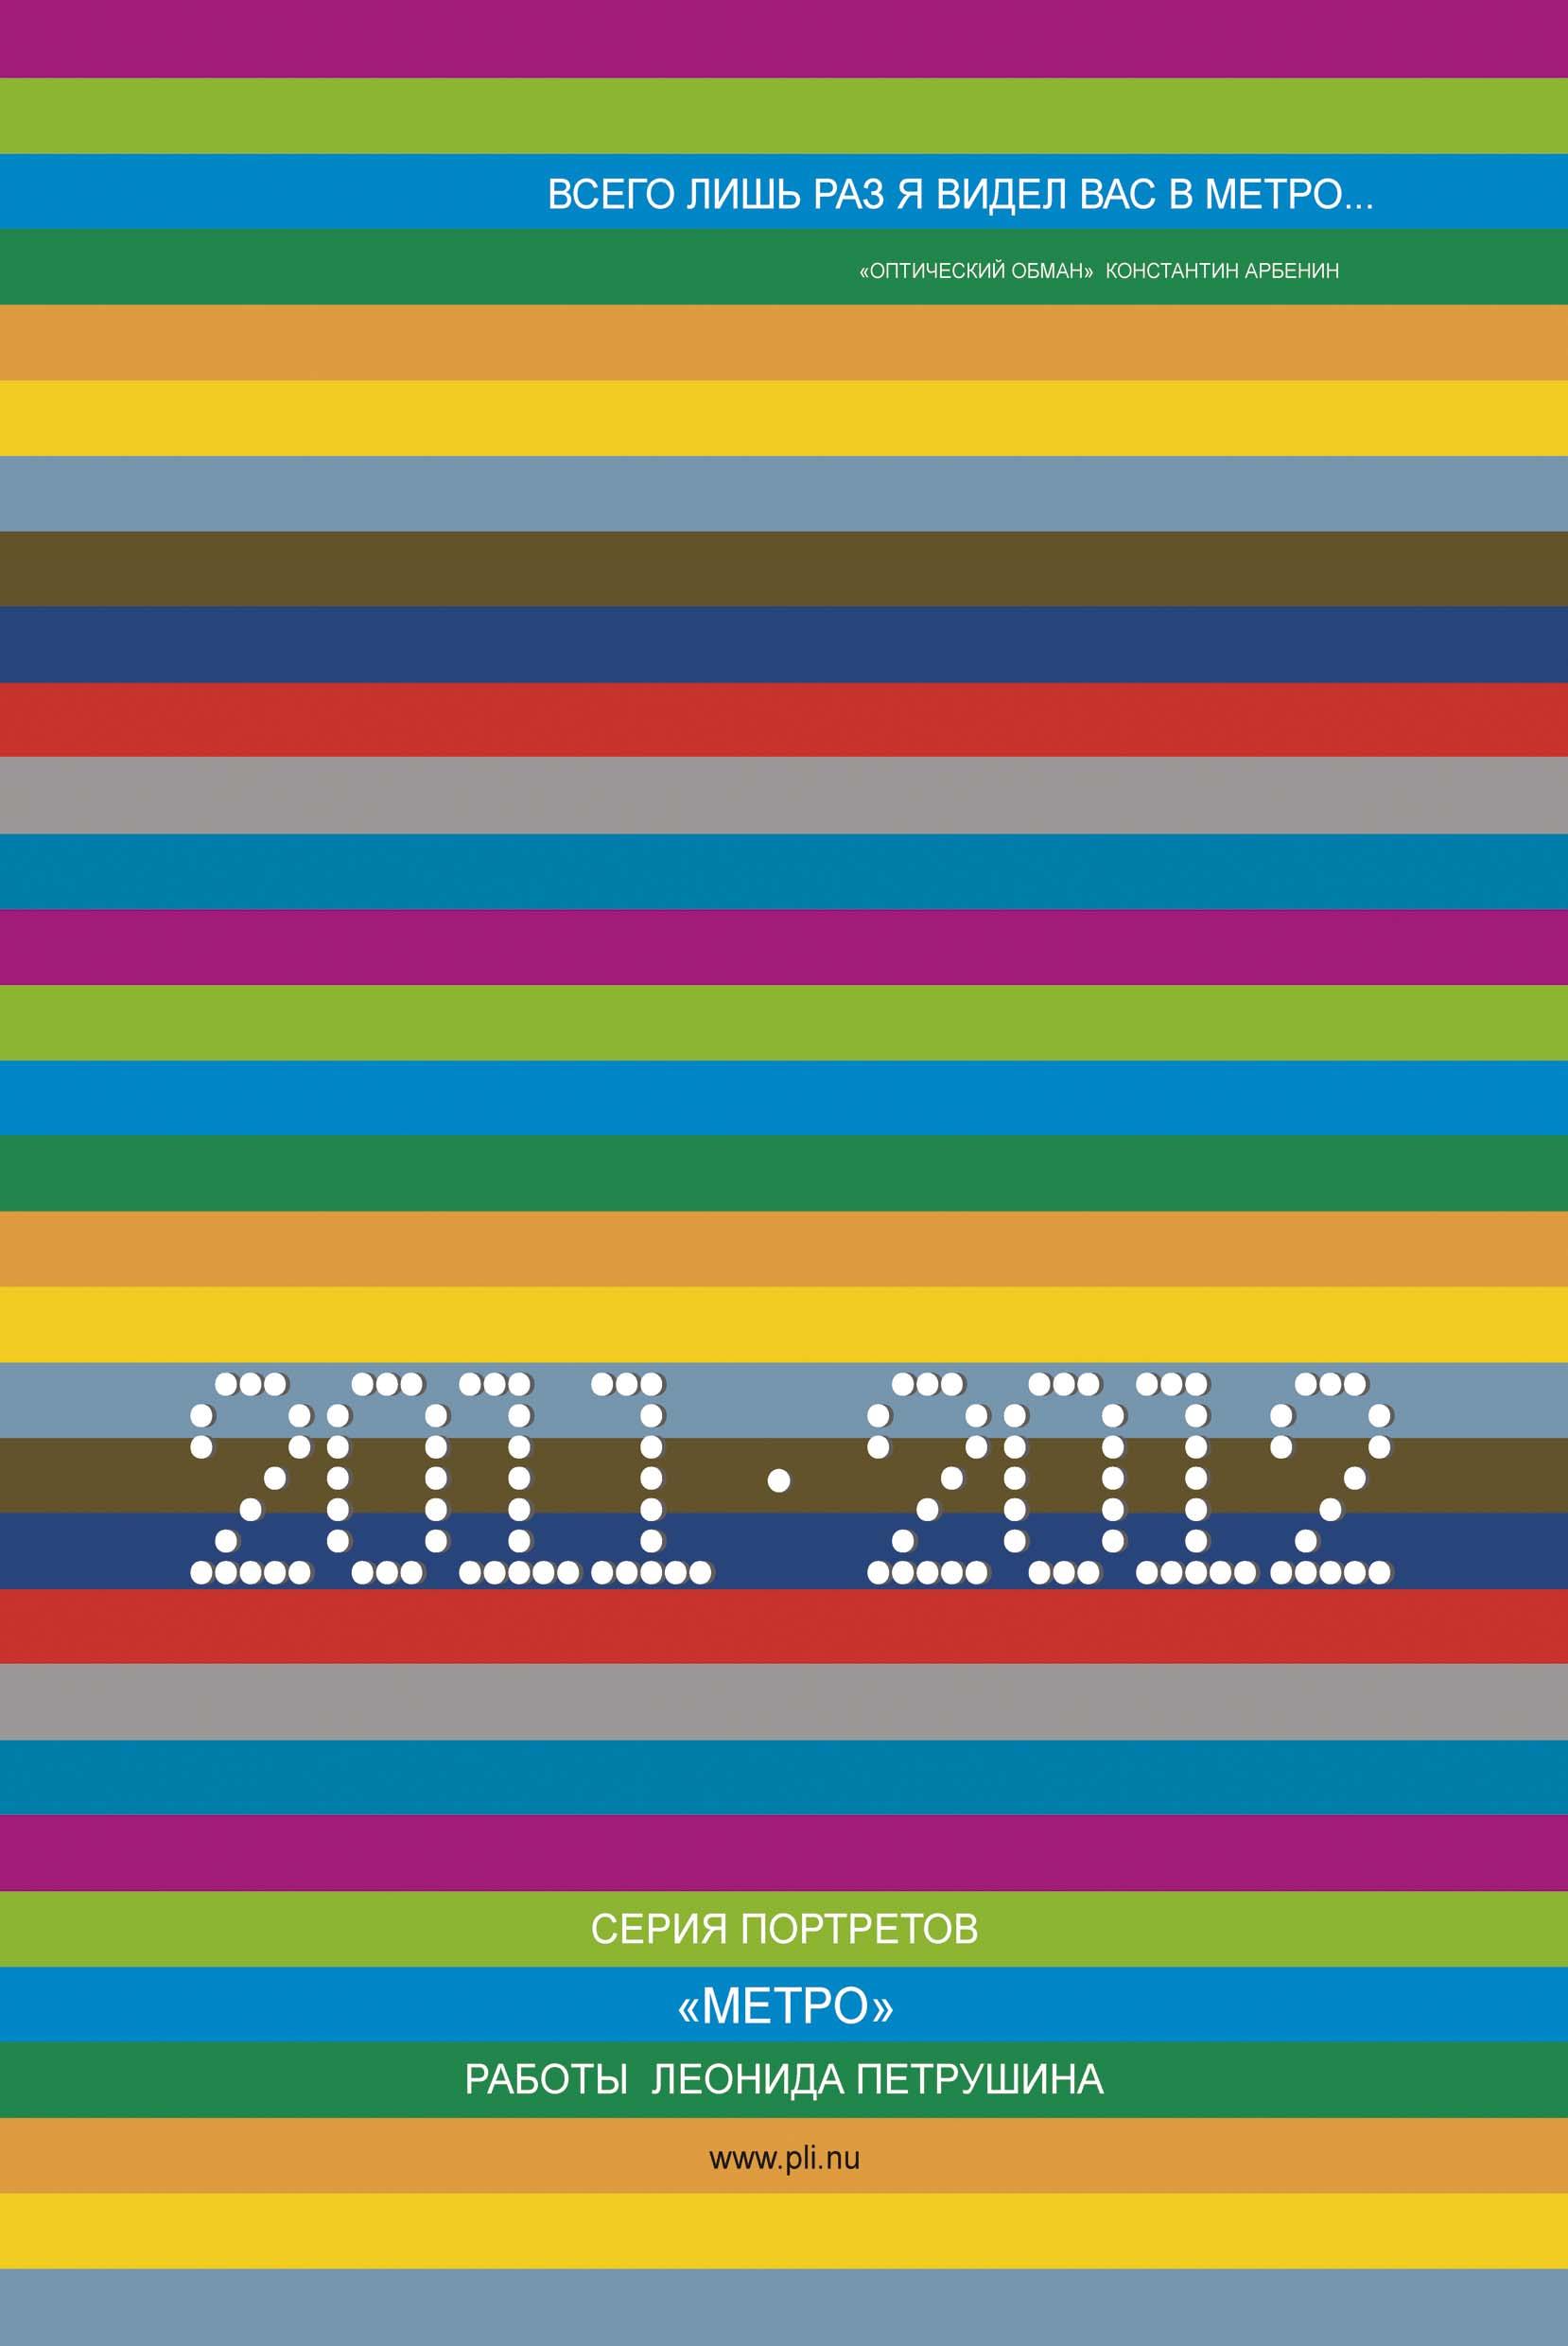 

Calendar 2011-2012



